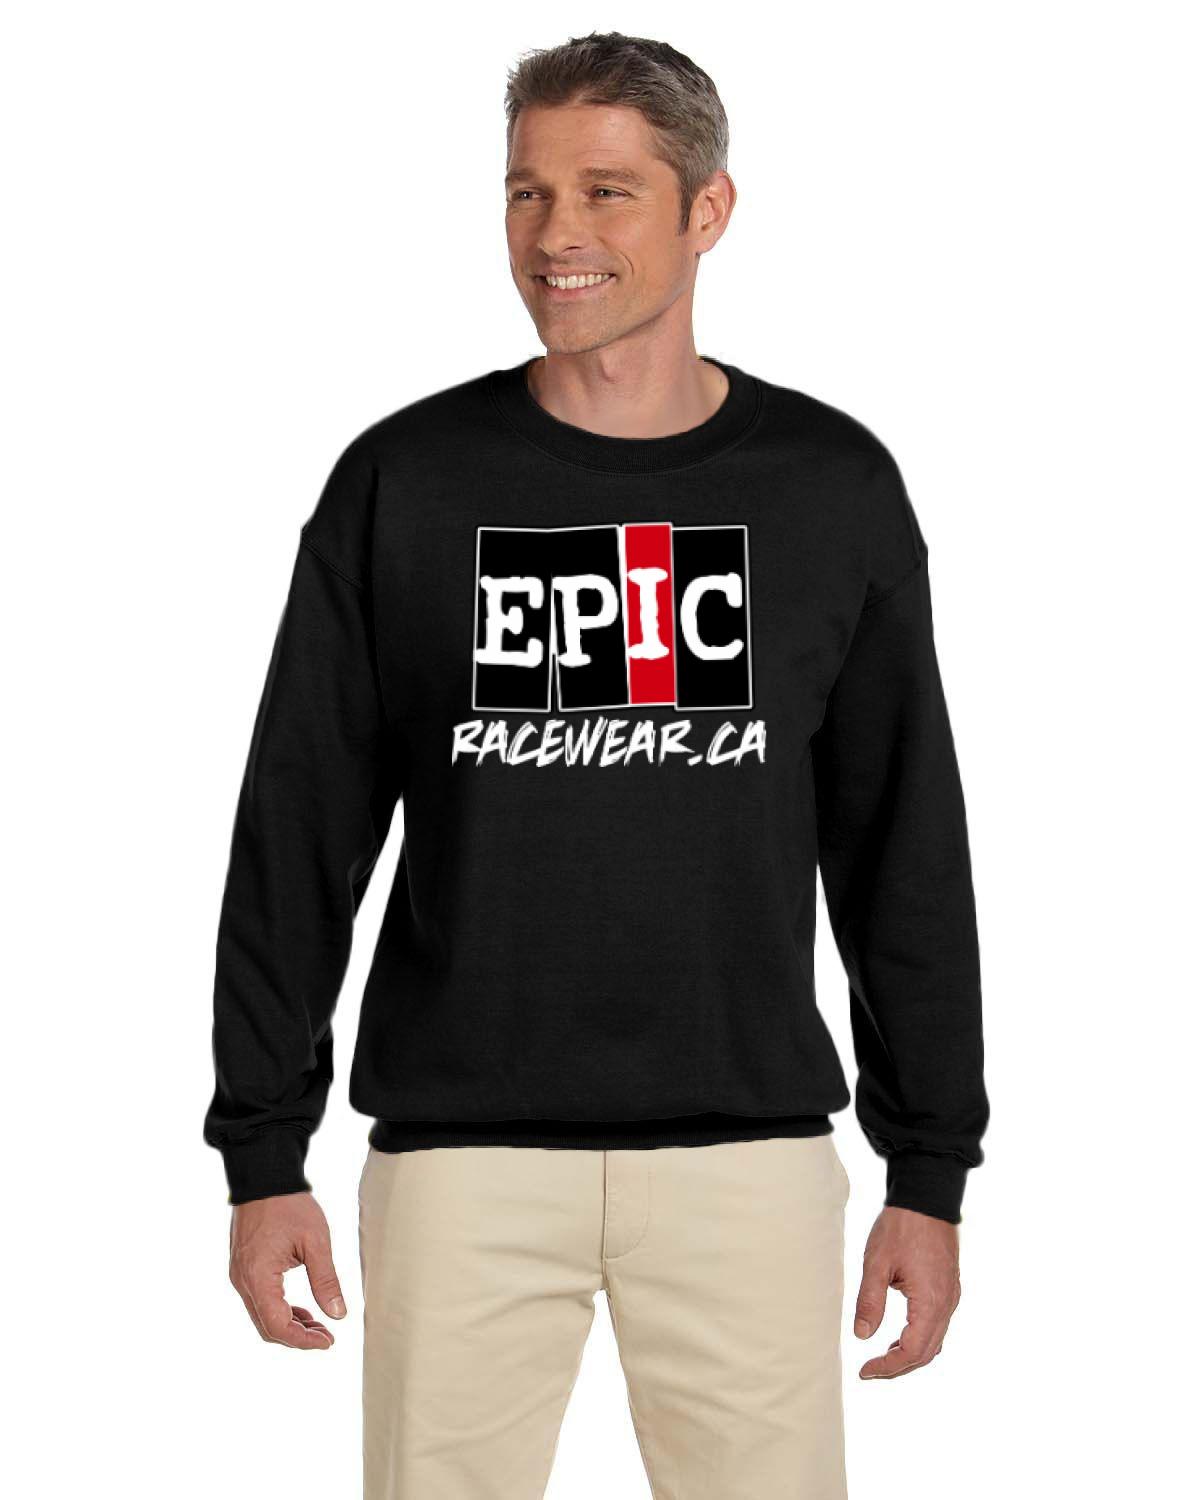 EPIC Racewear Crew Neck Sweater